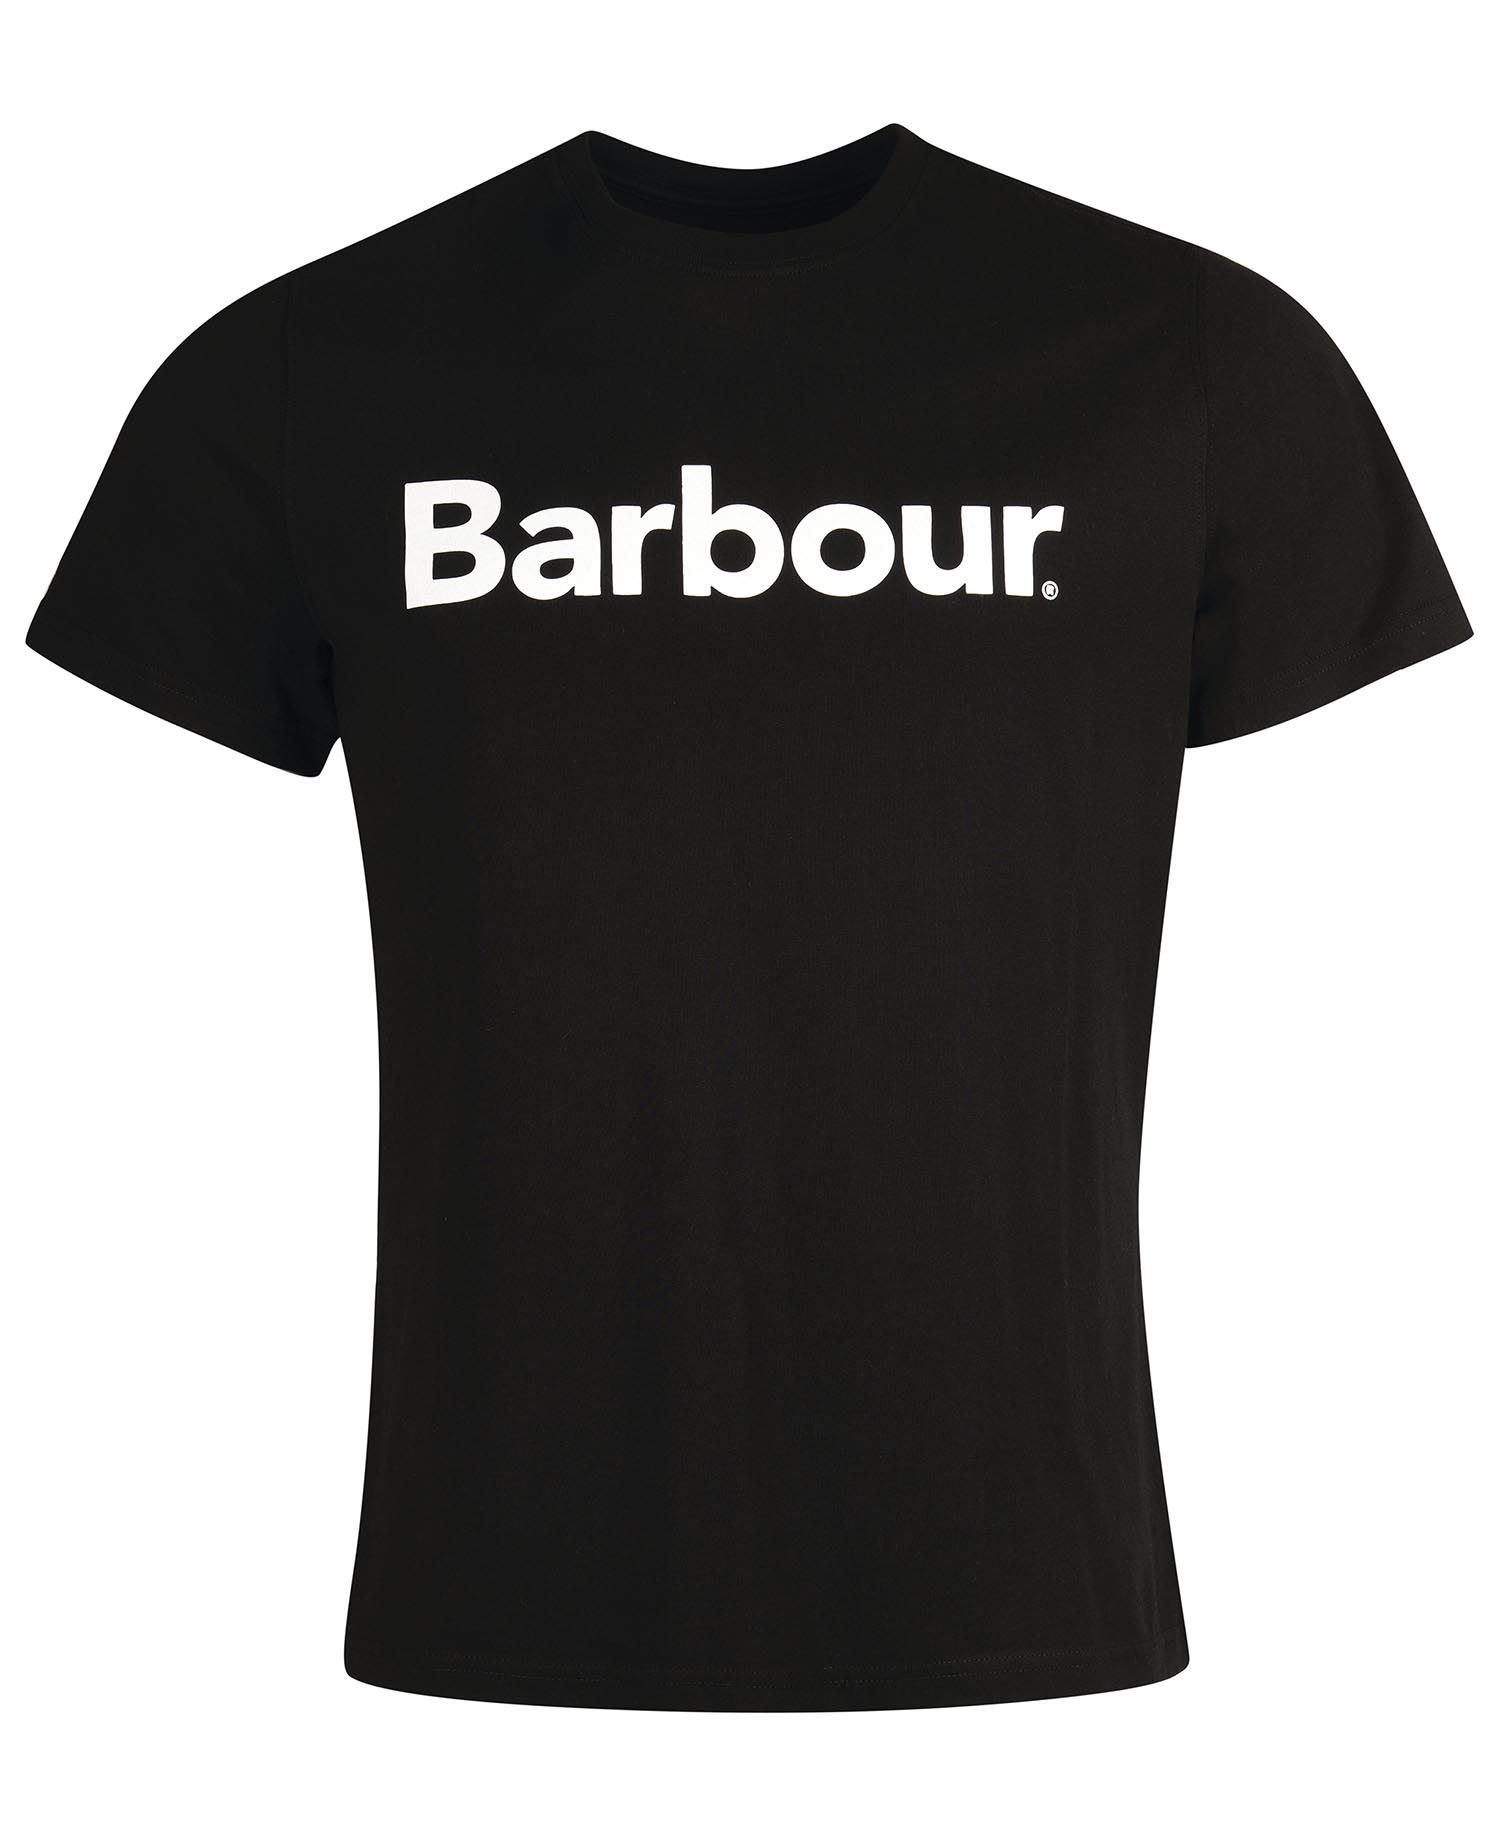 Barbour Barbour Logo T-shirt Tee Black